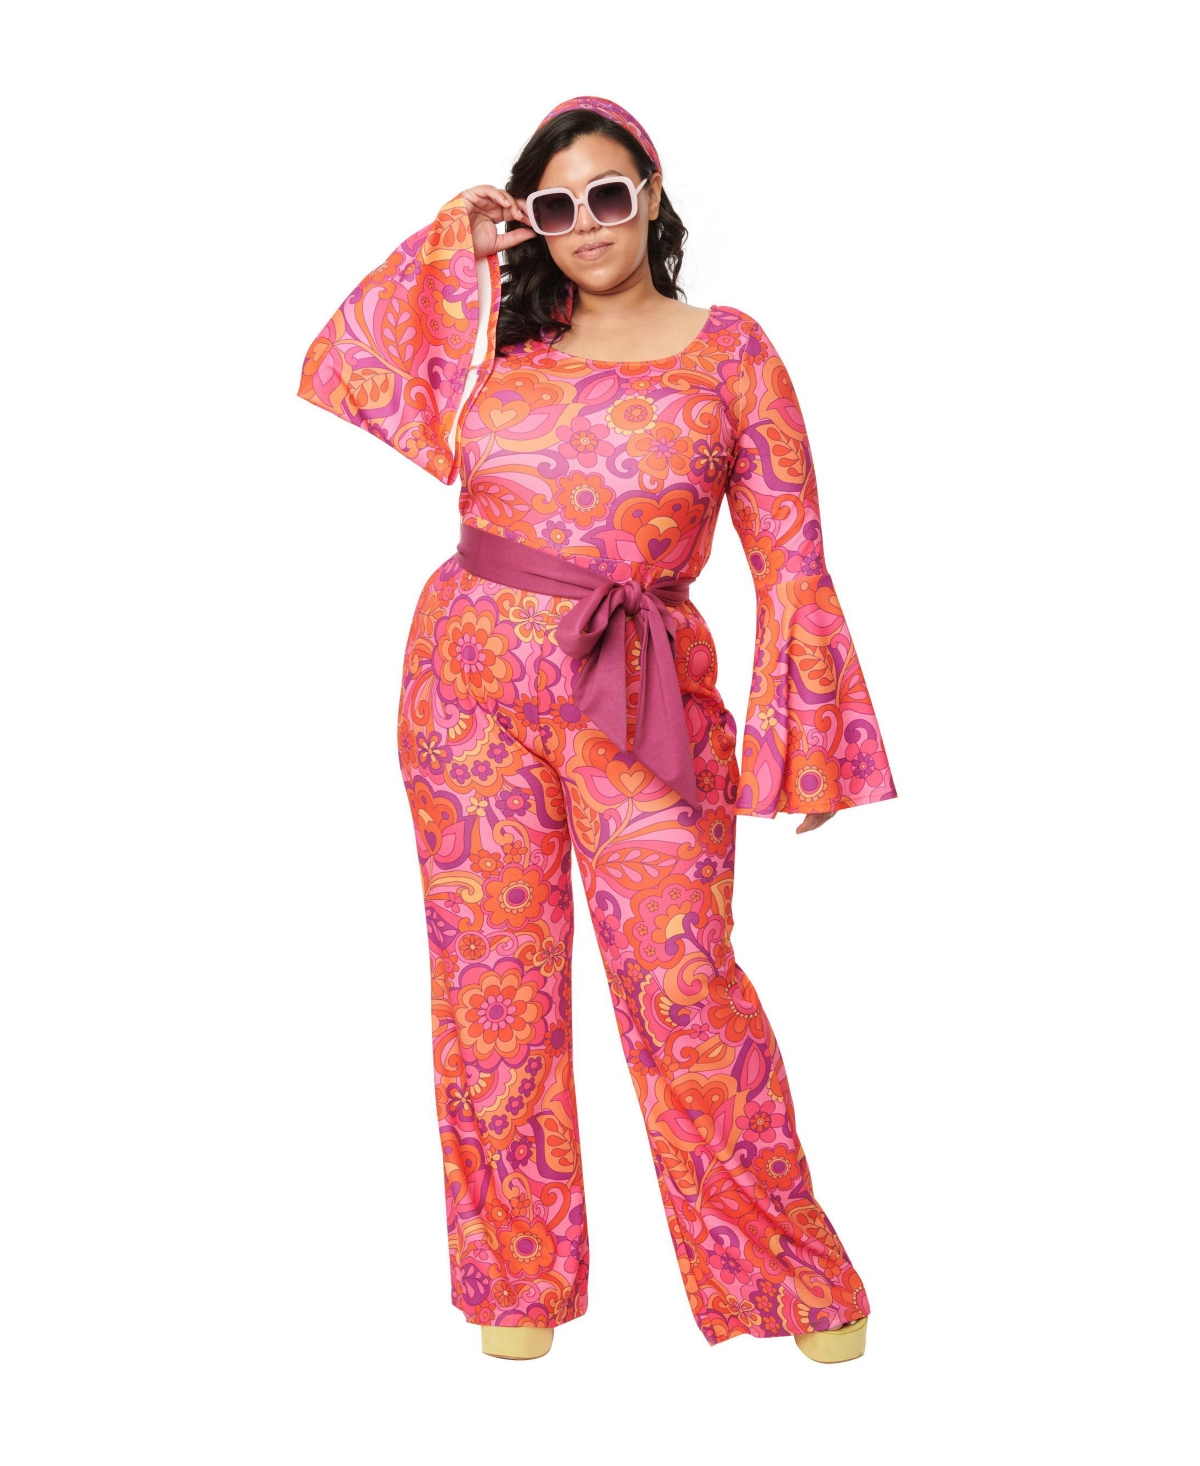 Plus Size Knit Bell Sleeve Sashed Jumpsuit - Pink mod floral